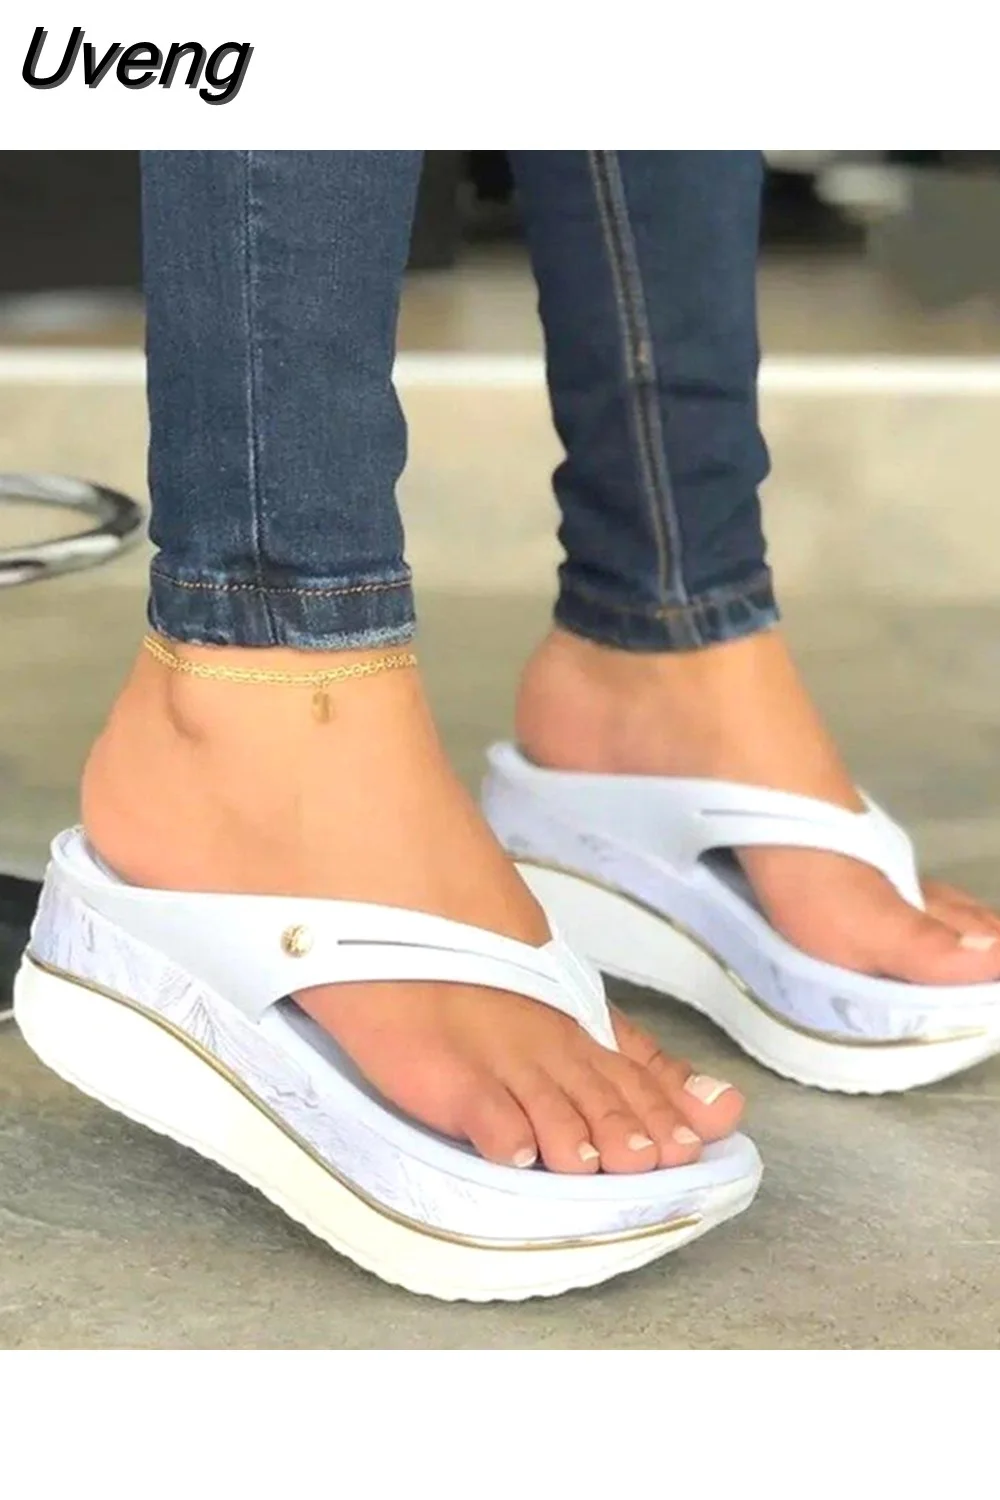 Uveng Sandals Platform Sandals Women Flip Flops 2023 Summer Sandals Slipper Indoor Outdoor Flip-flops Beach Shoes Female Sandals 420-0